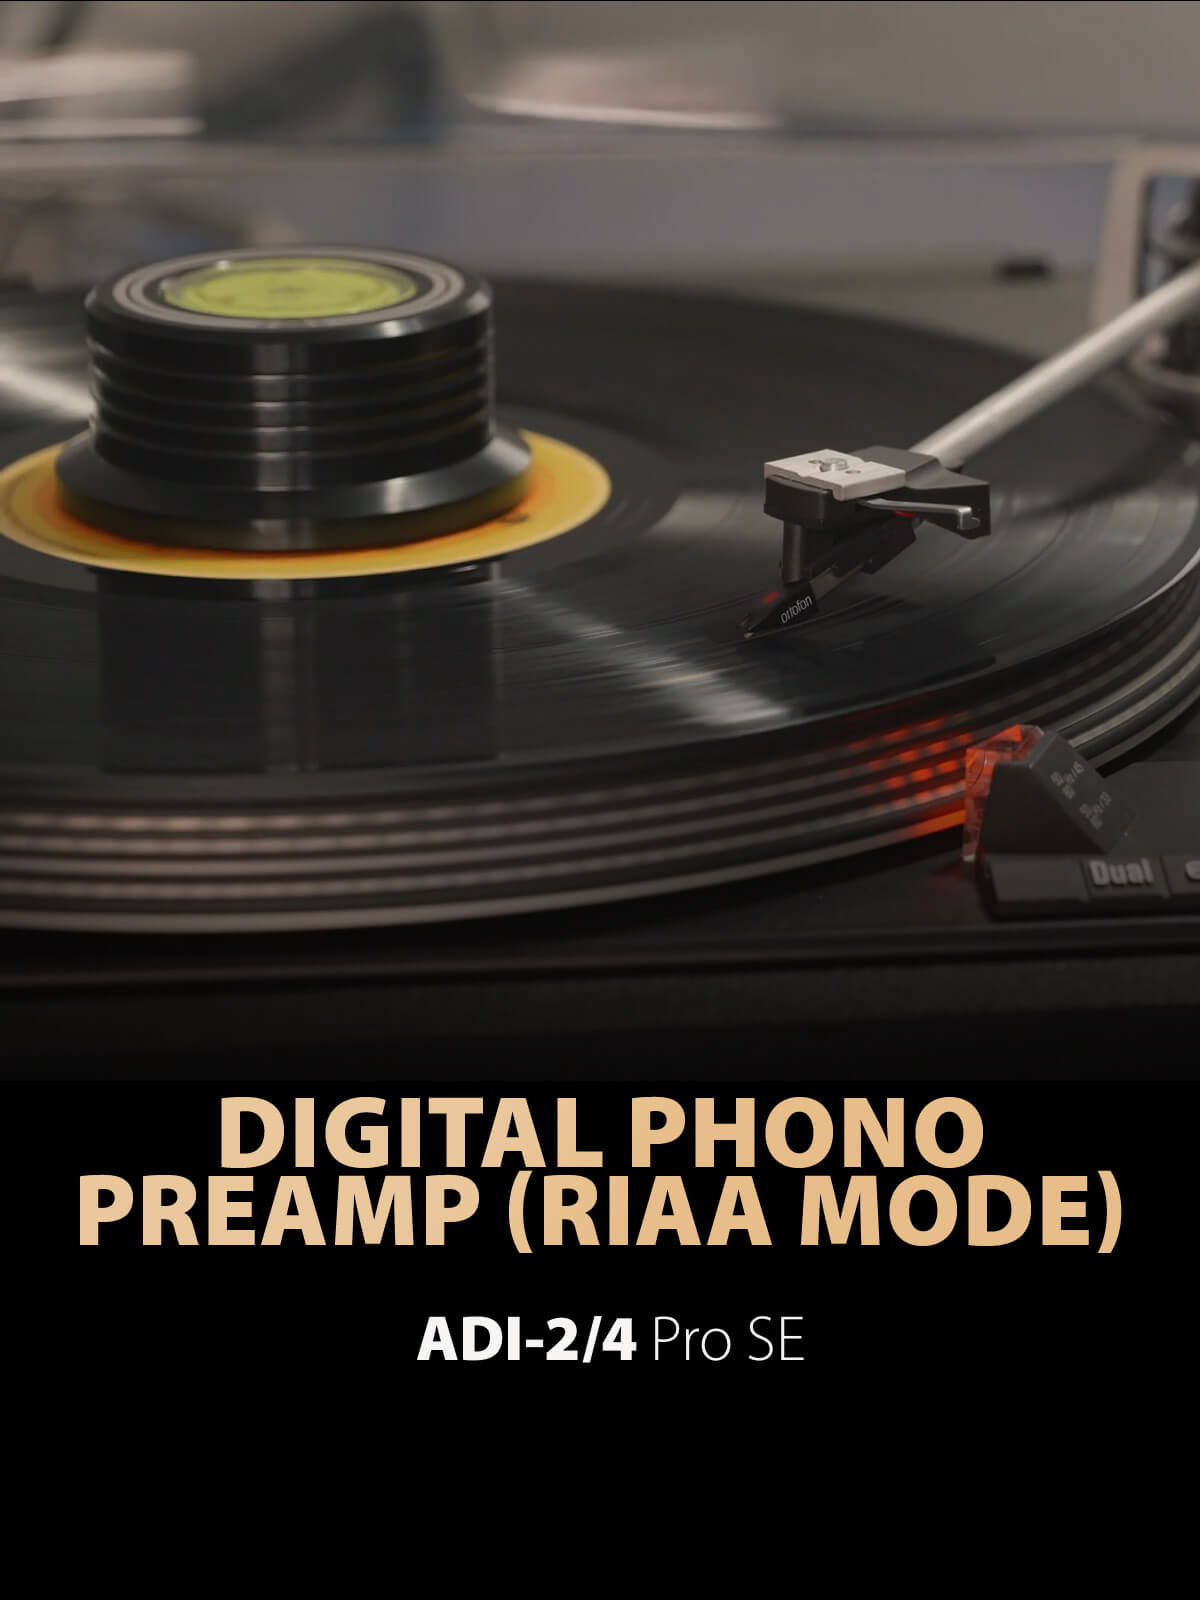 Digital Phono Preamp (RIAA Mode) Explained